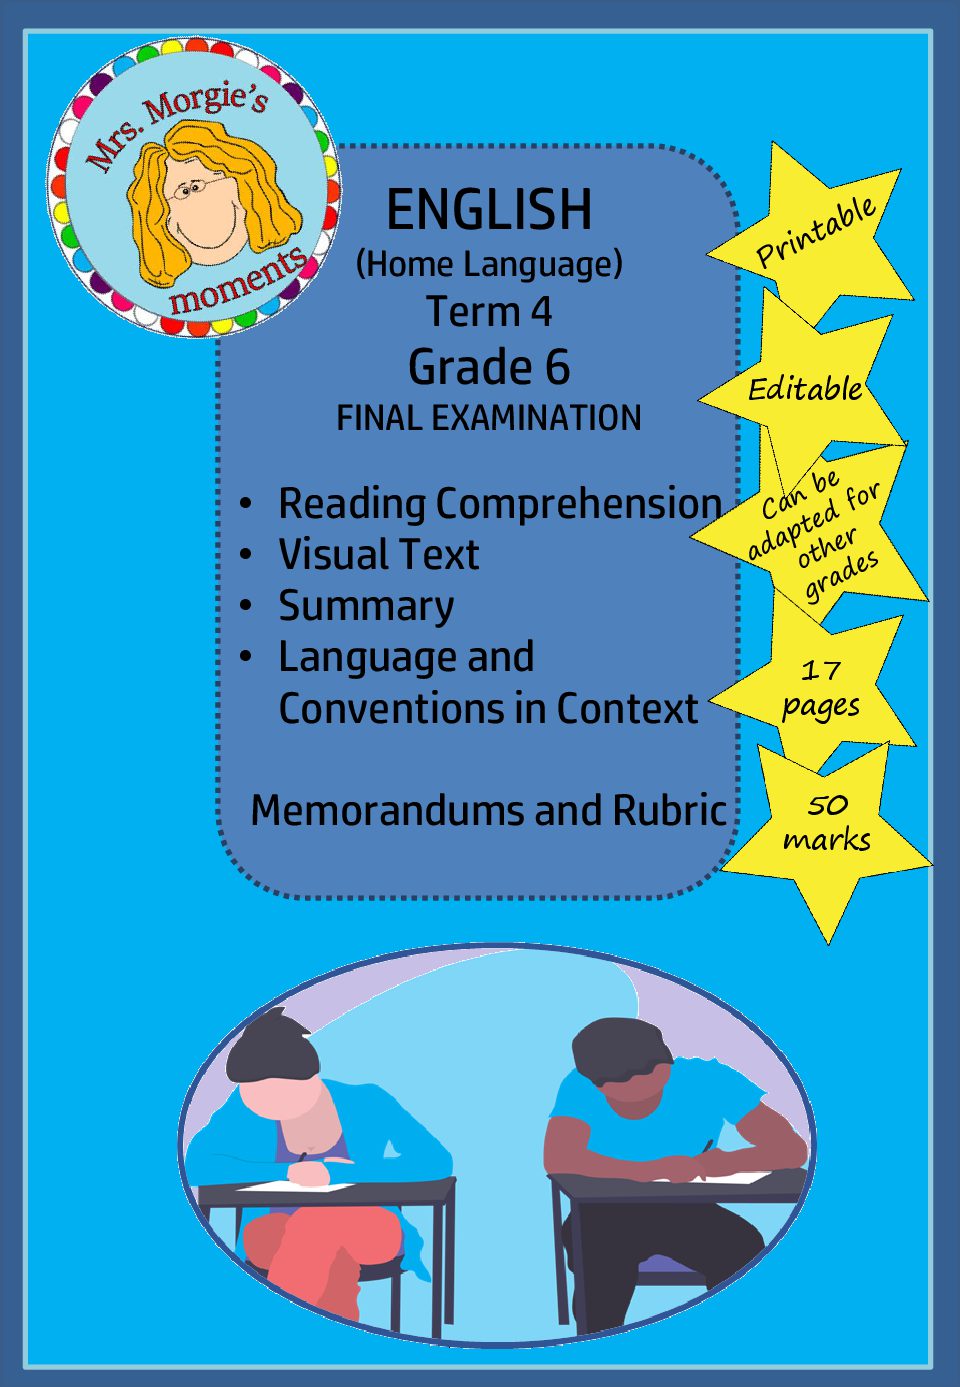 English Final Examination cover 1 • Teacha